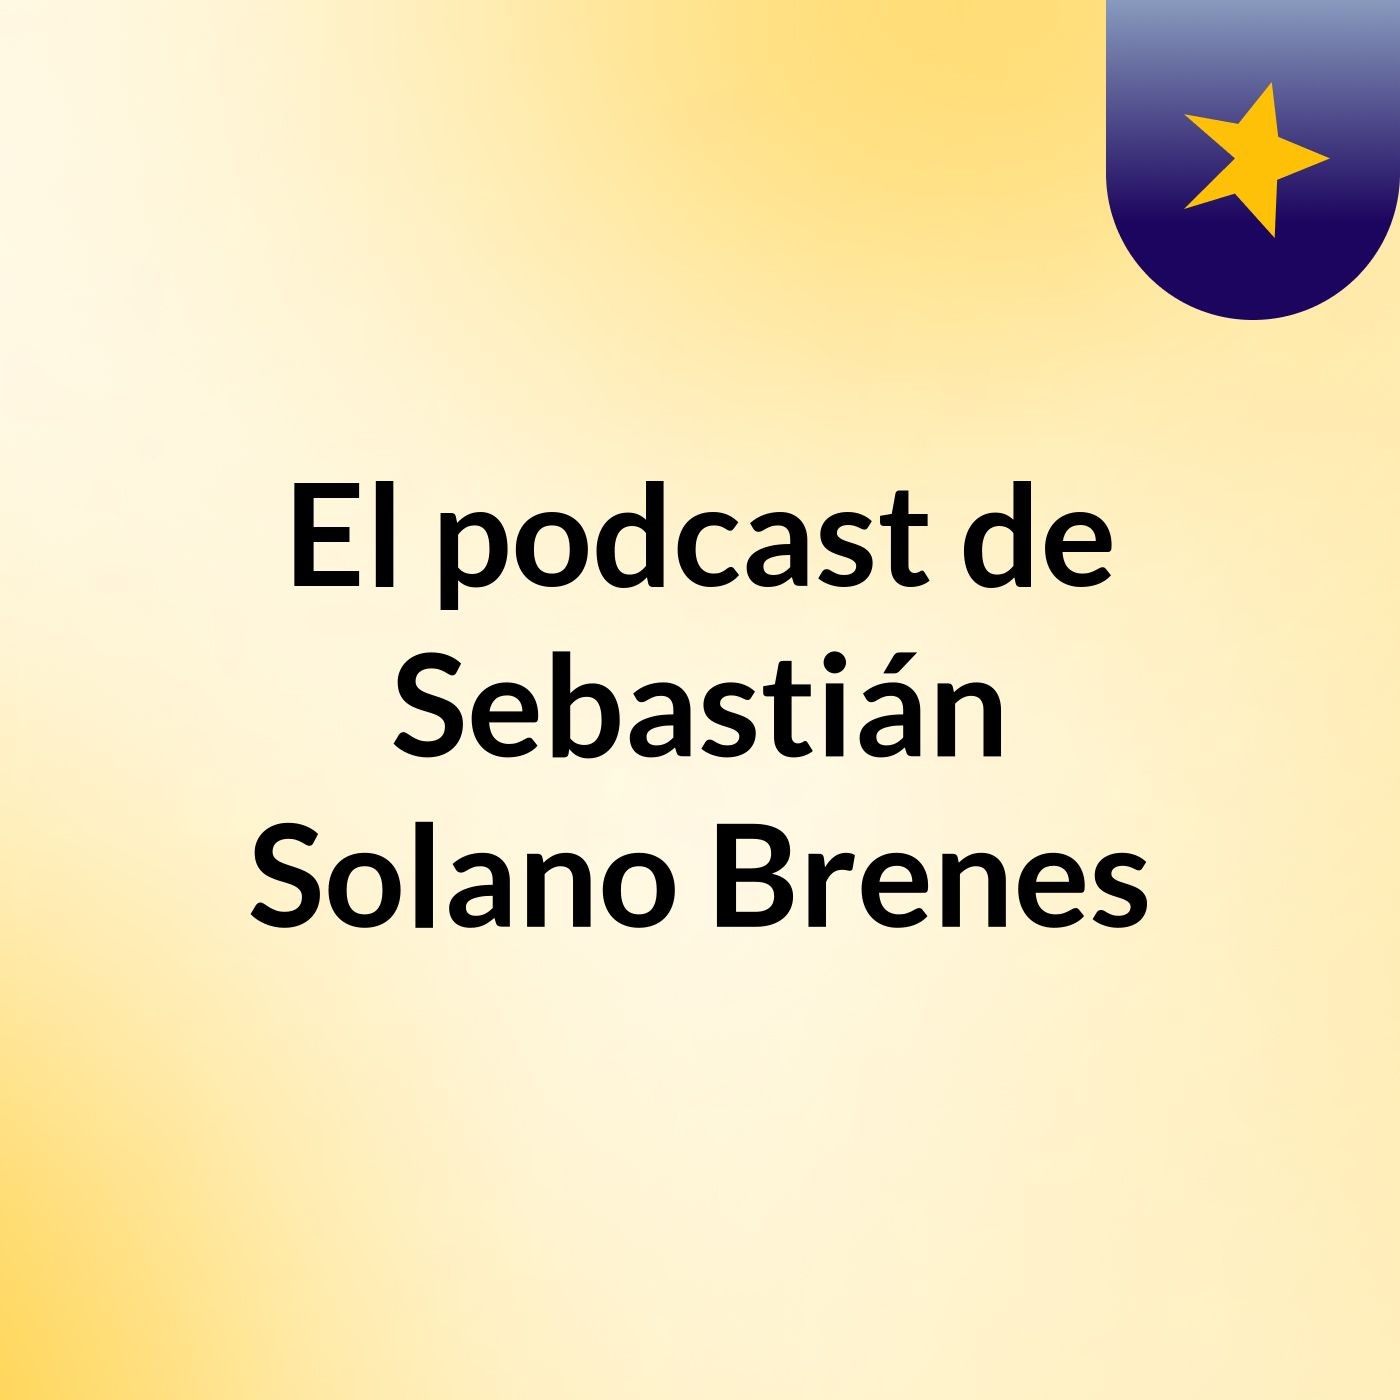 El podcast de Sebastián Solano Brenes